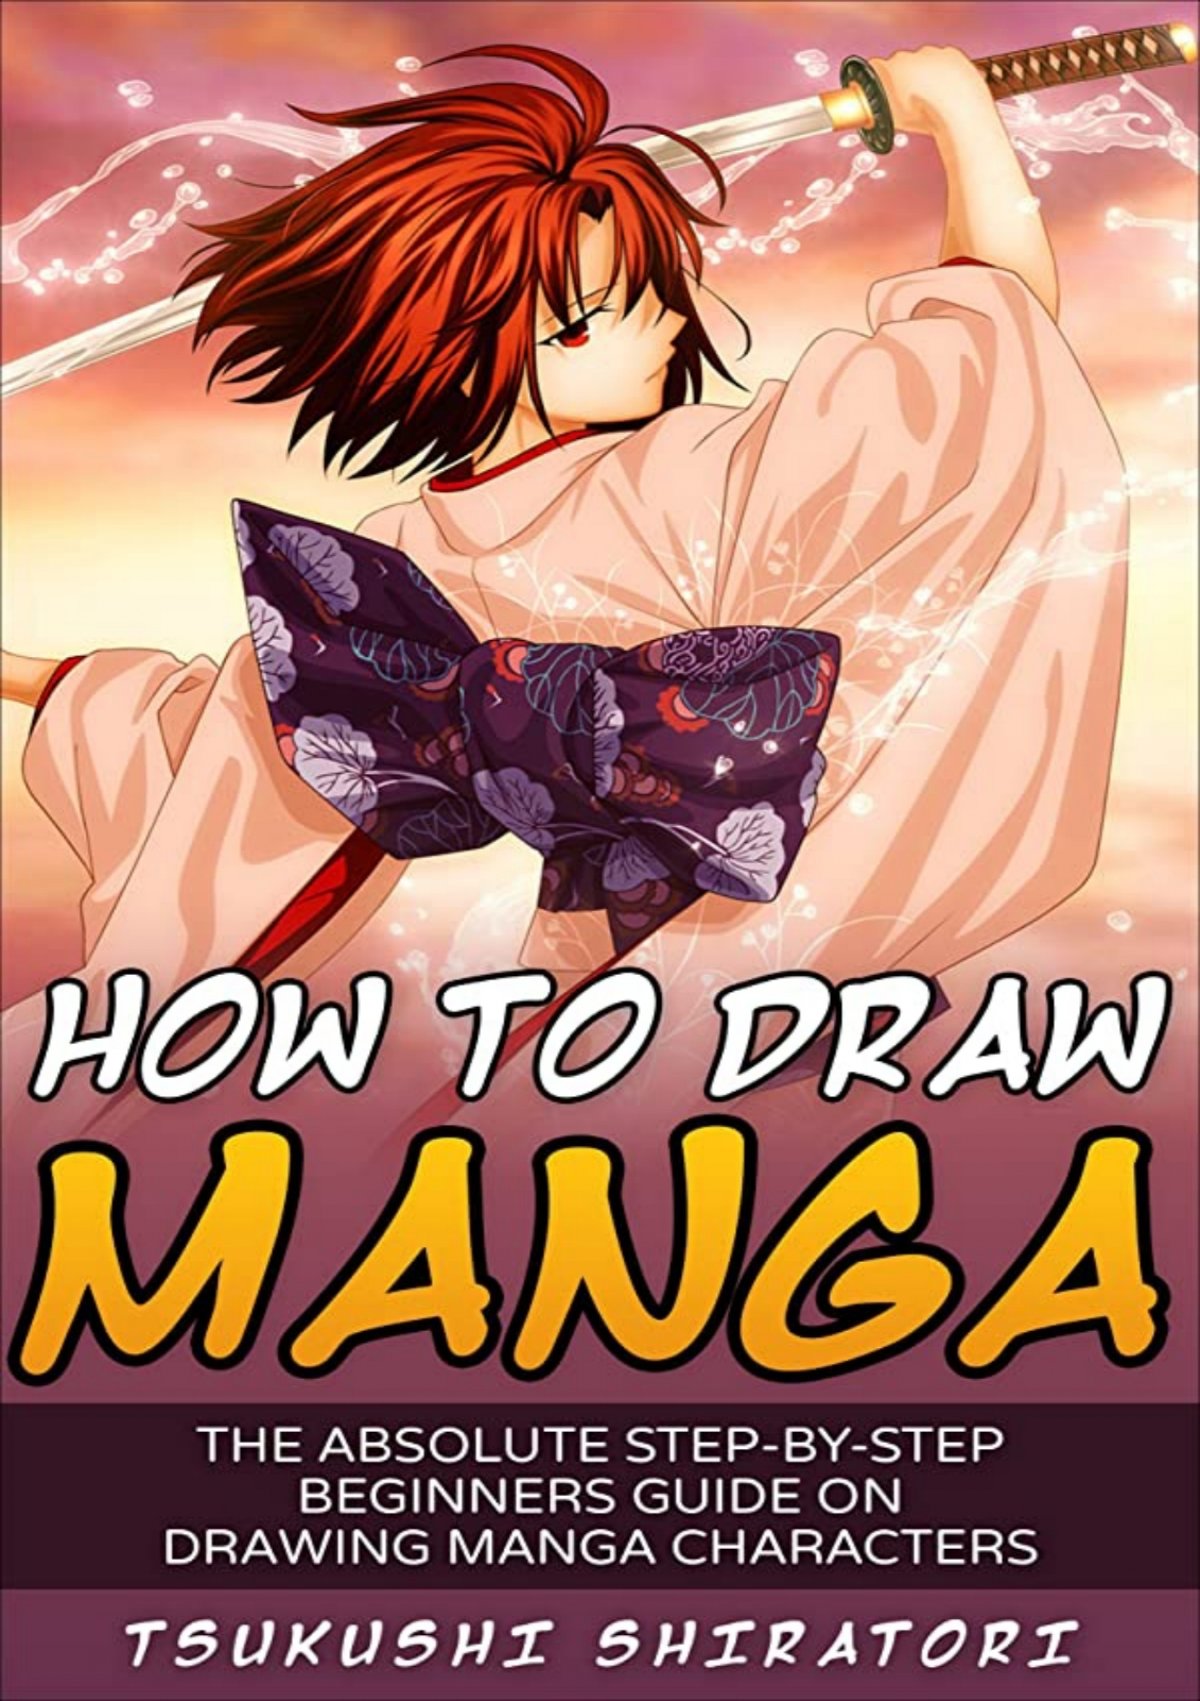 How to draw manga pdf download